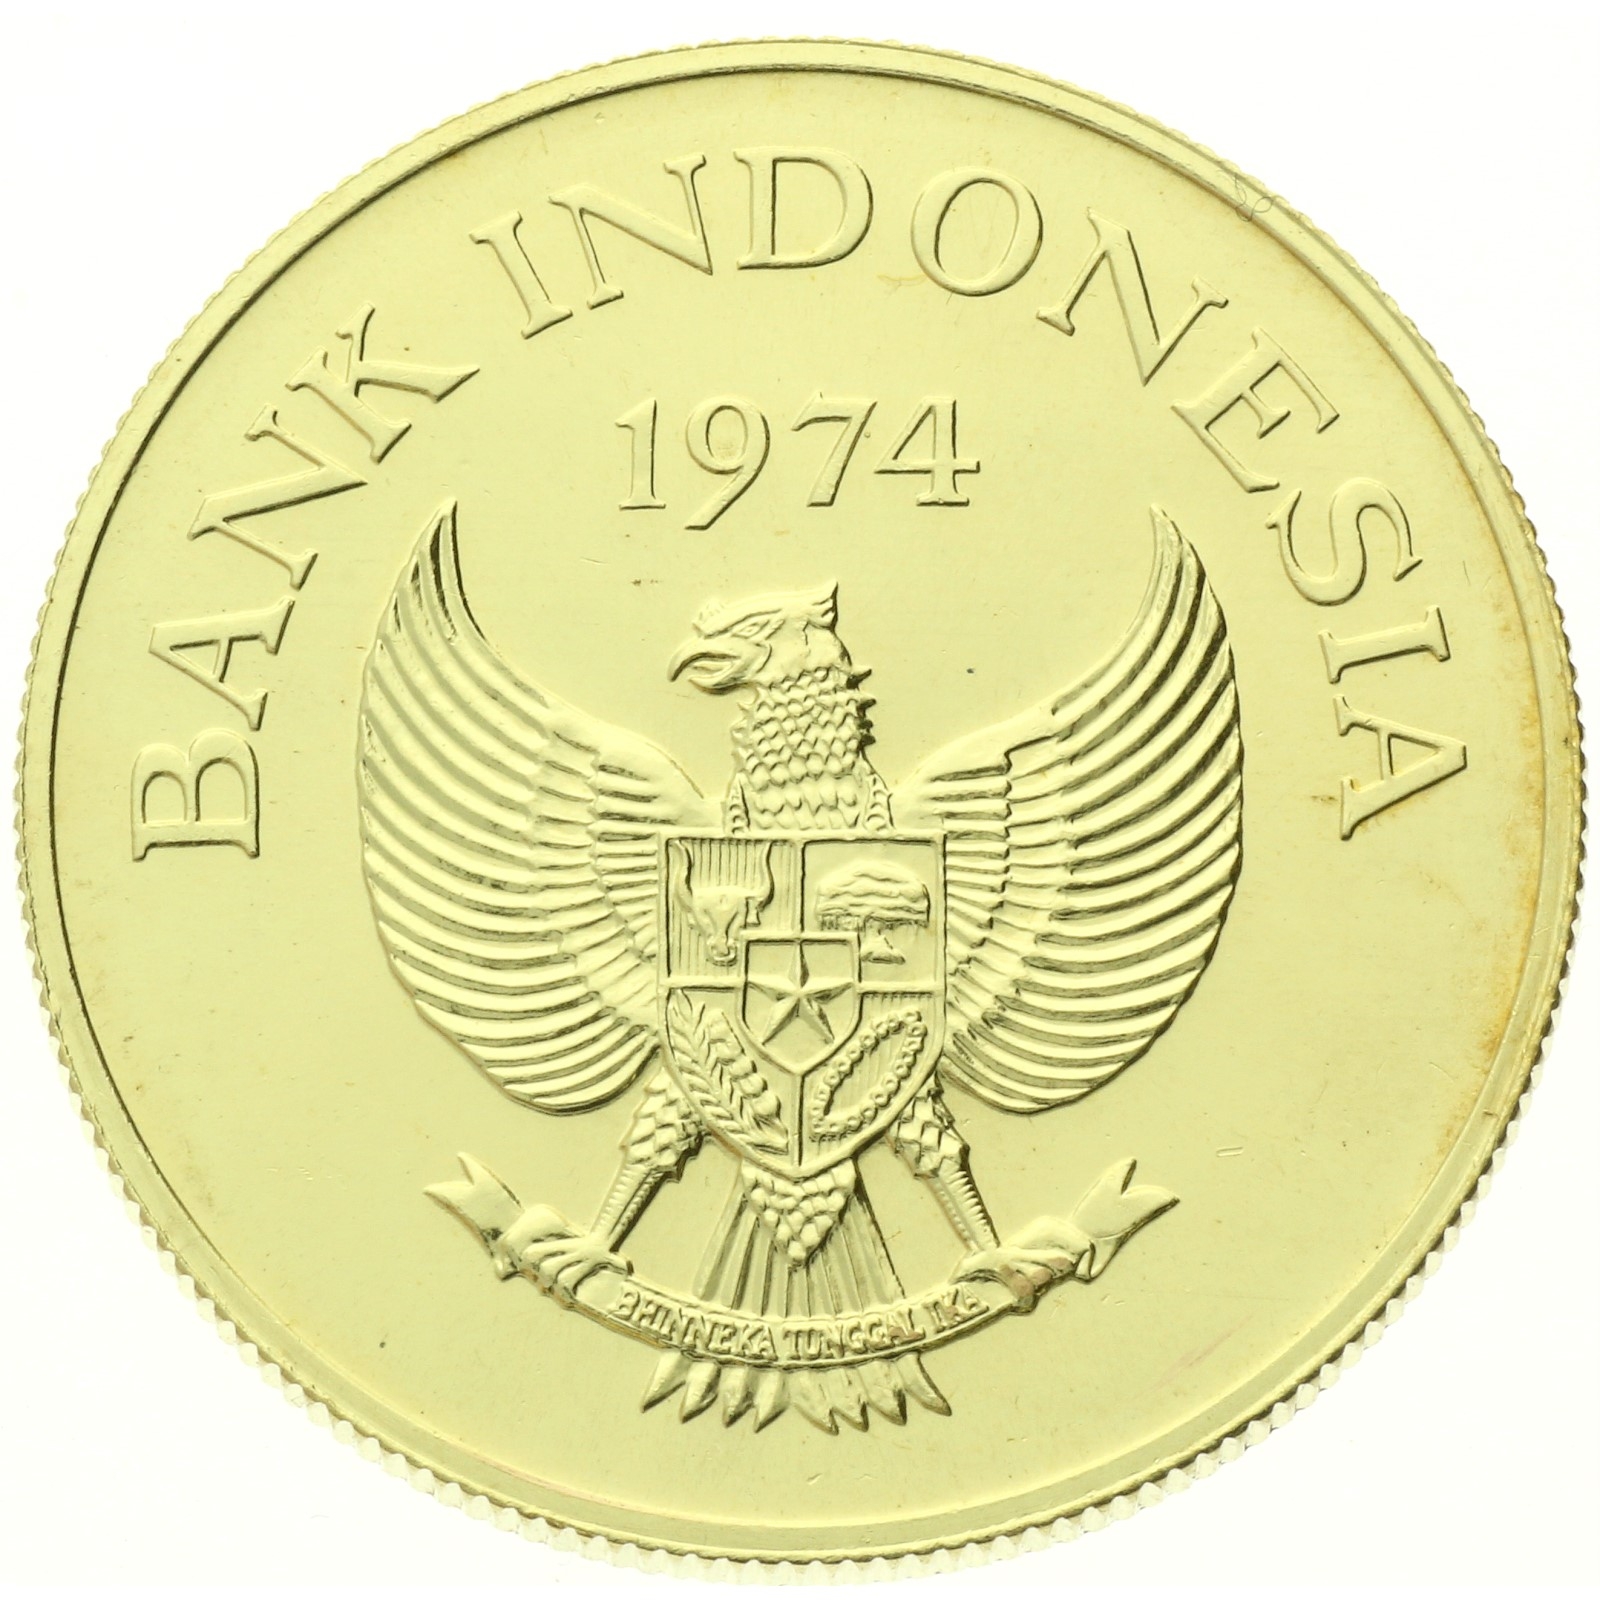 Indonesia - 100000 rupiah - 1974 - Komodo Dragon